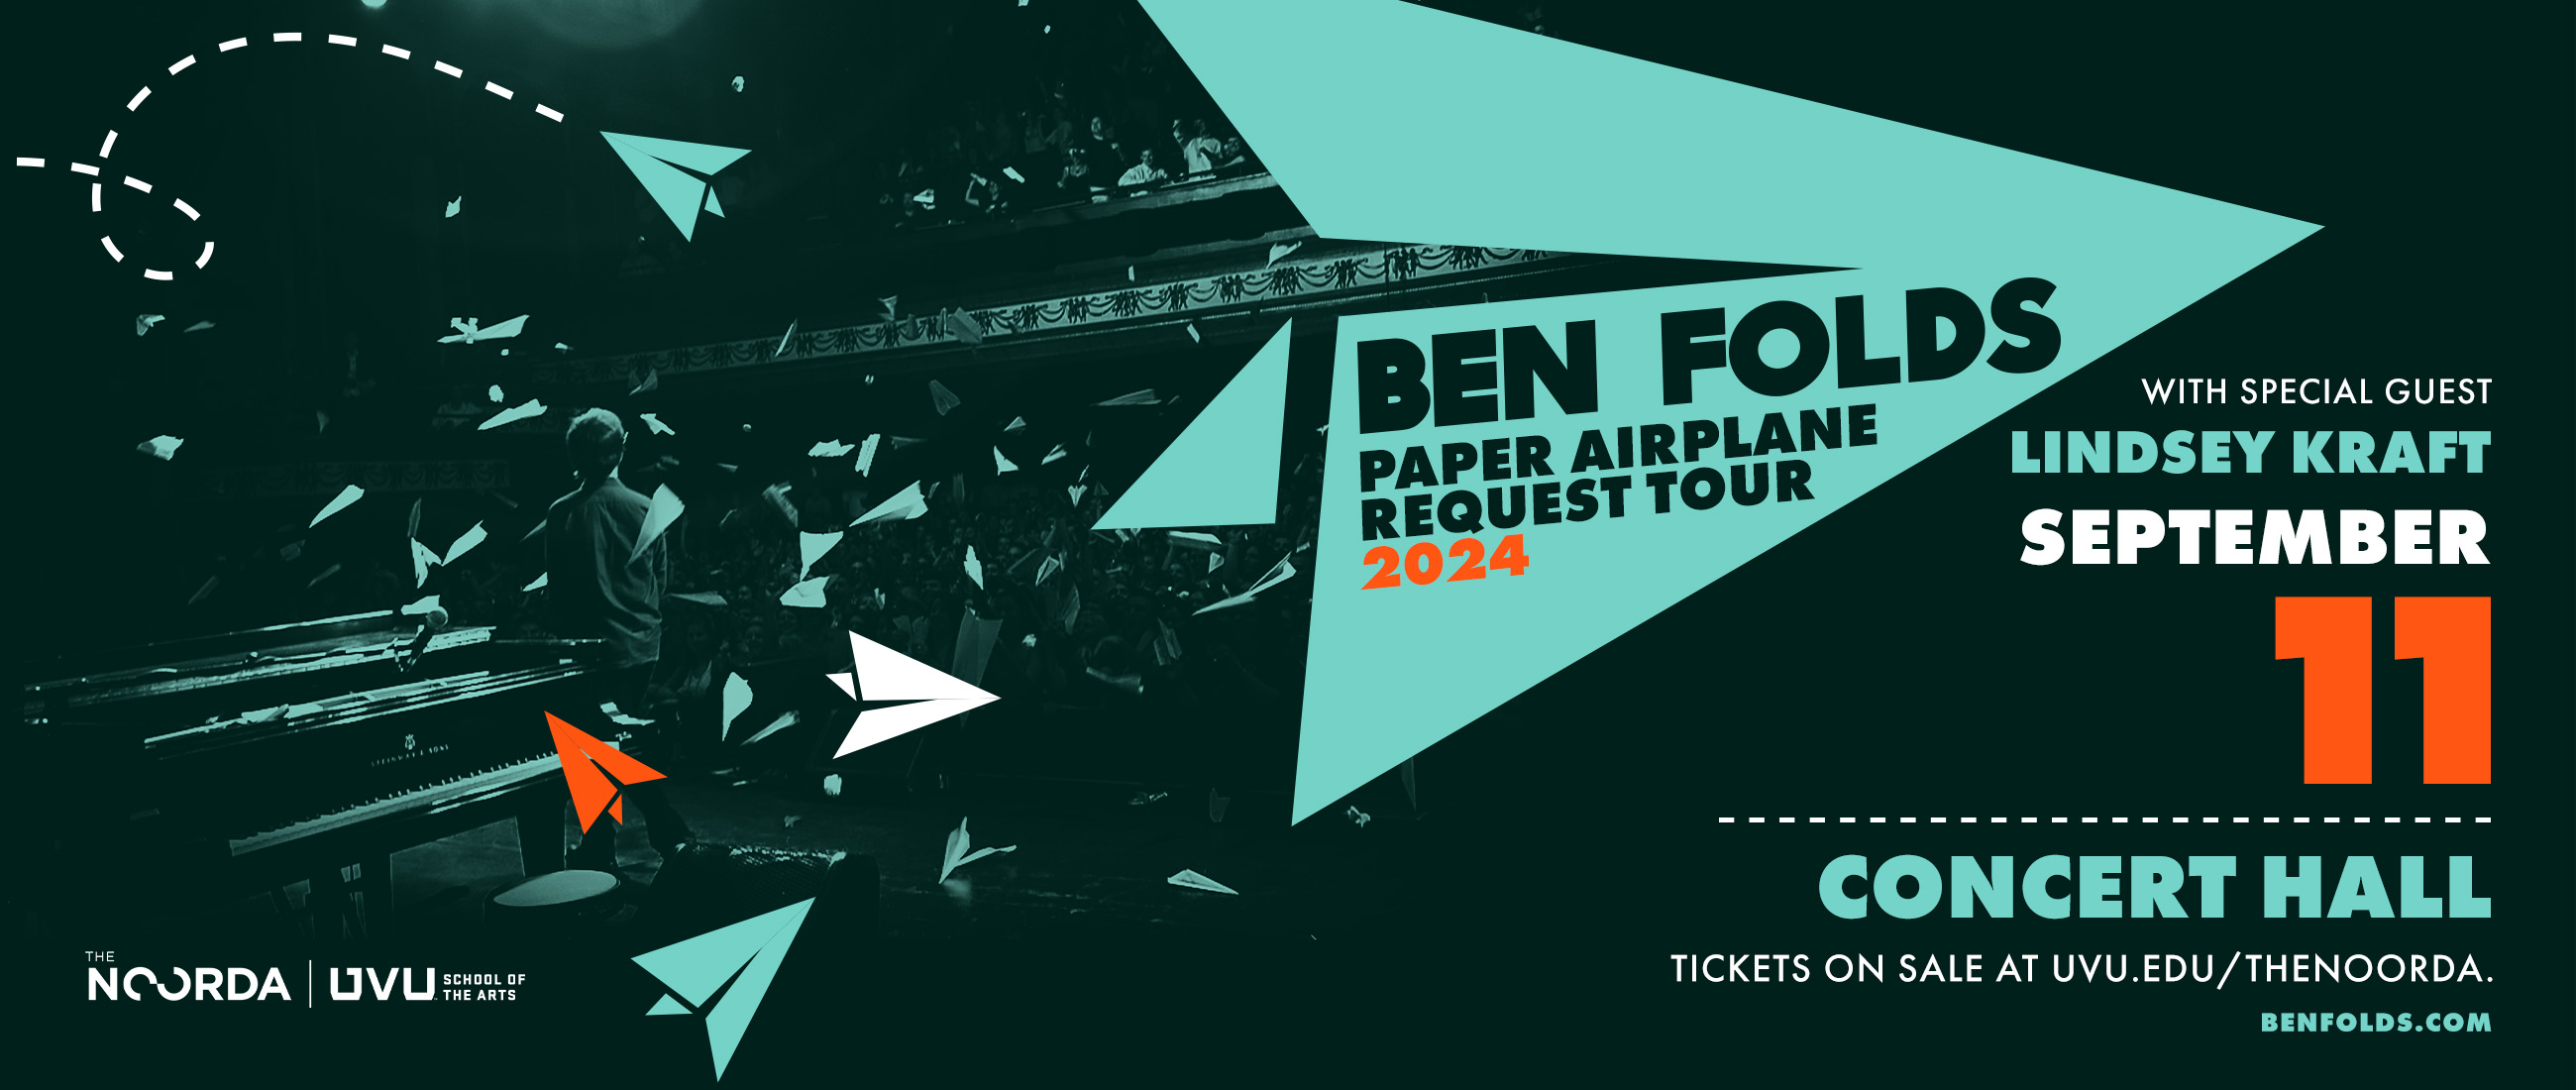 Ben Folds Paper Airplane Request Tour 2024 | Sept. 11 | The Noorda | Tickets on Sale at uvu.edu/thenoorda | benfolds.com